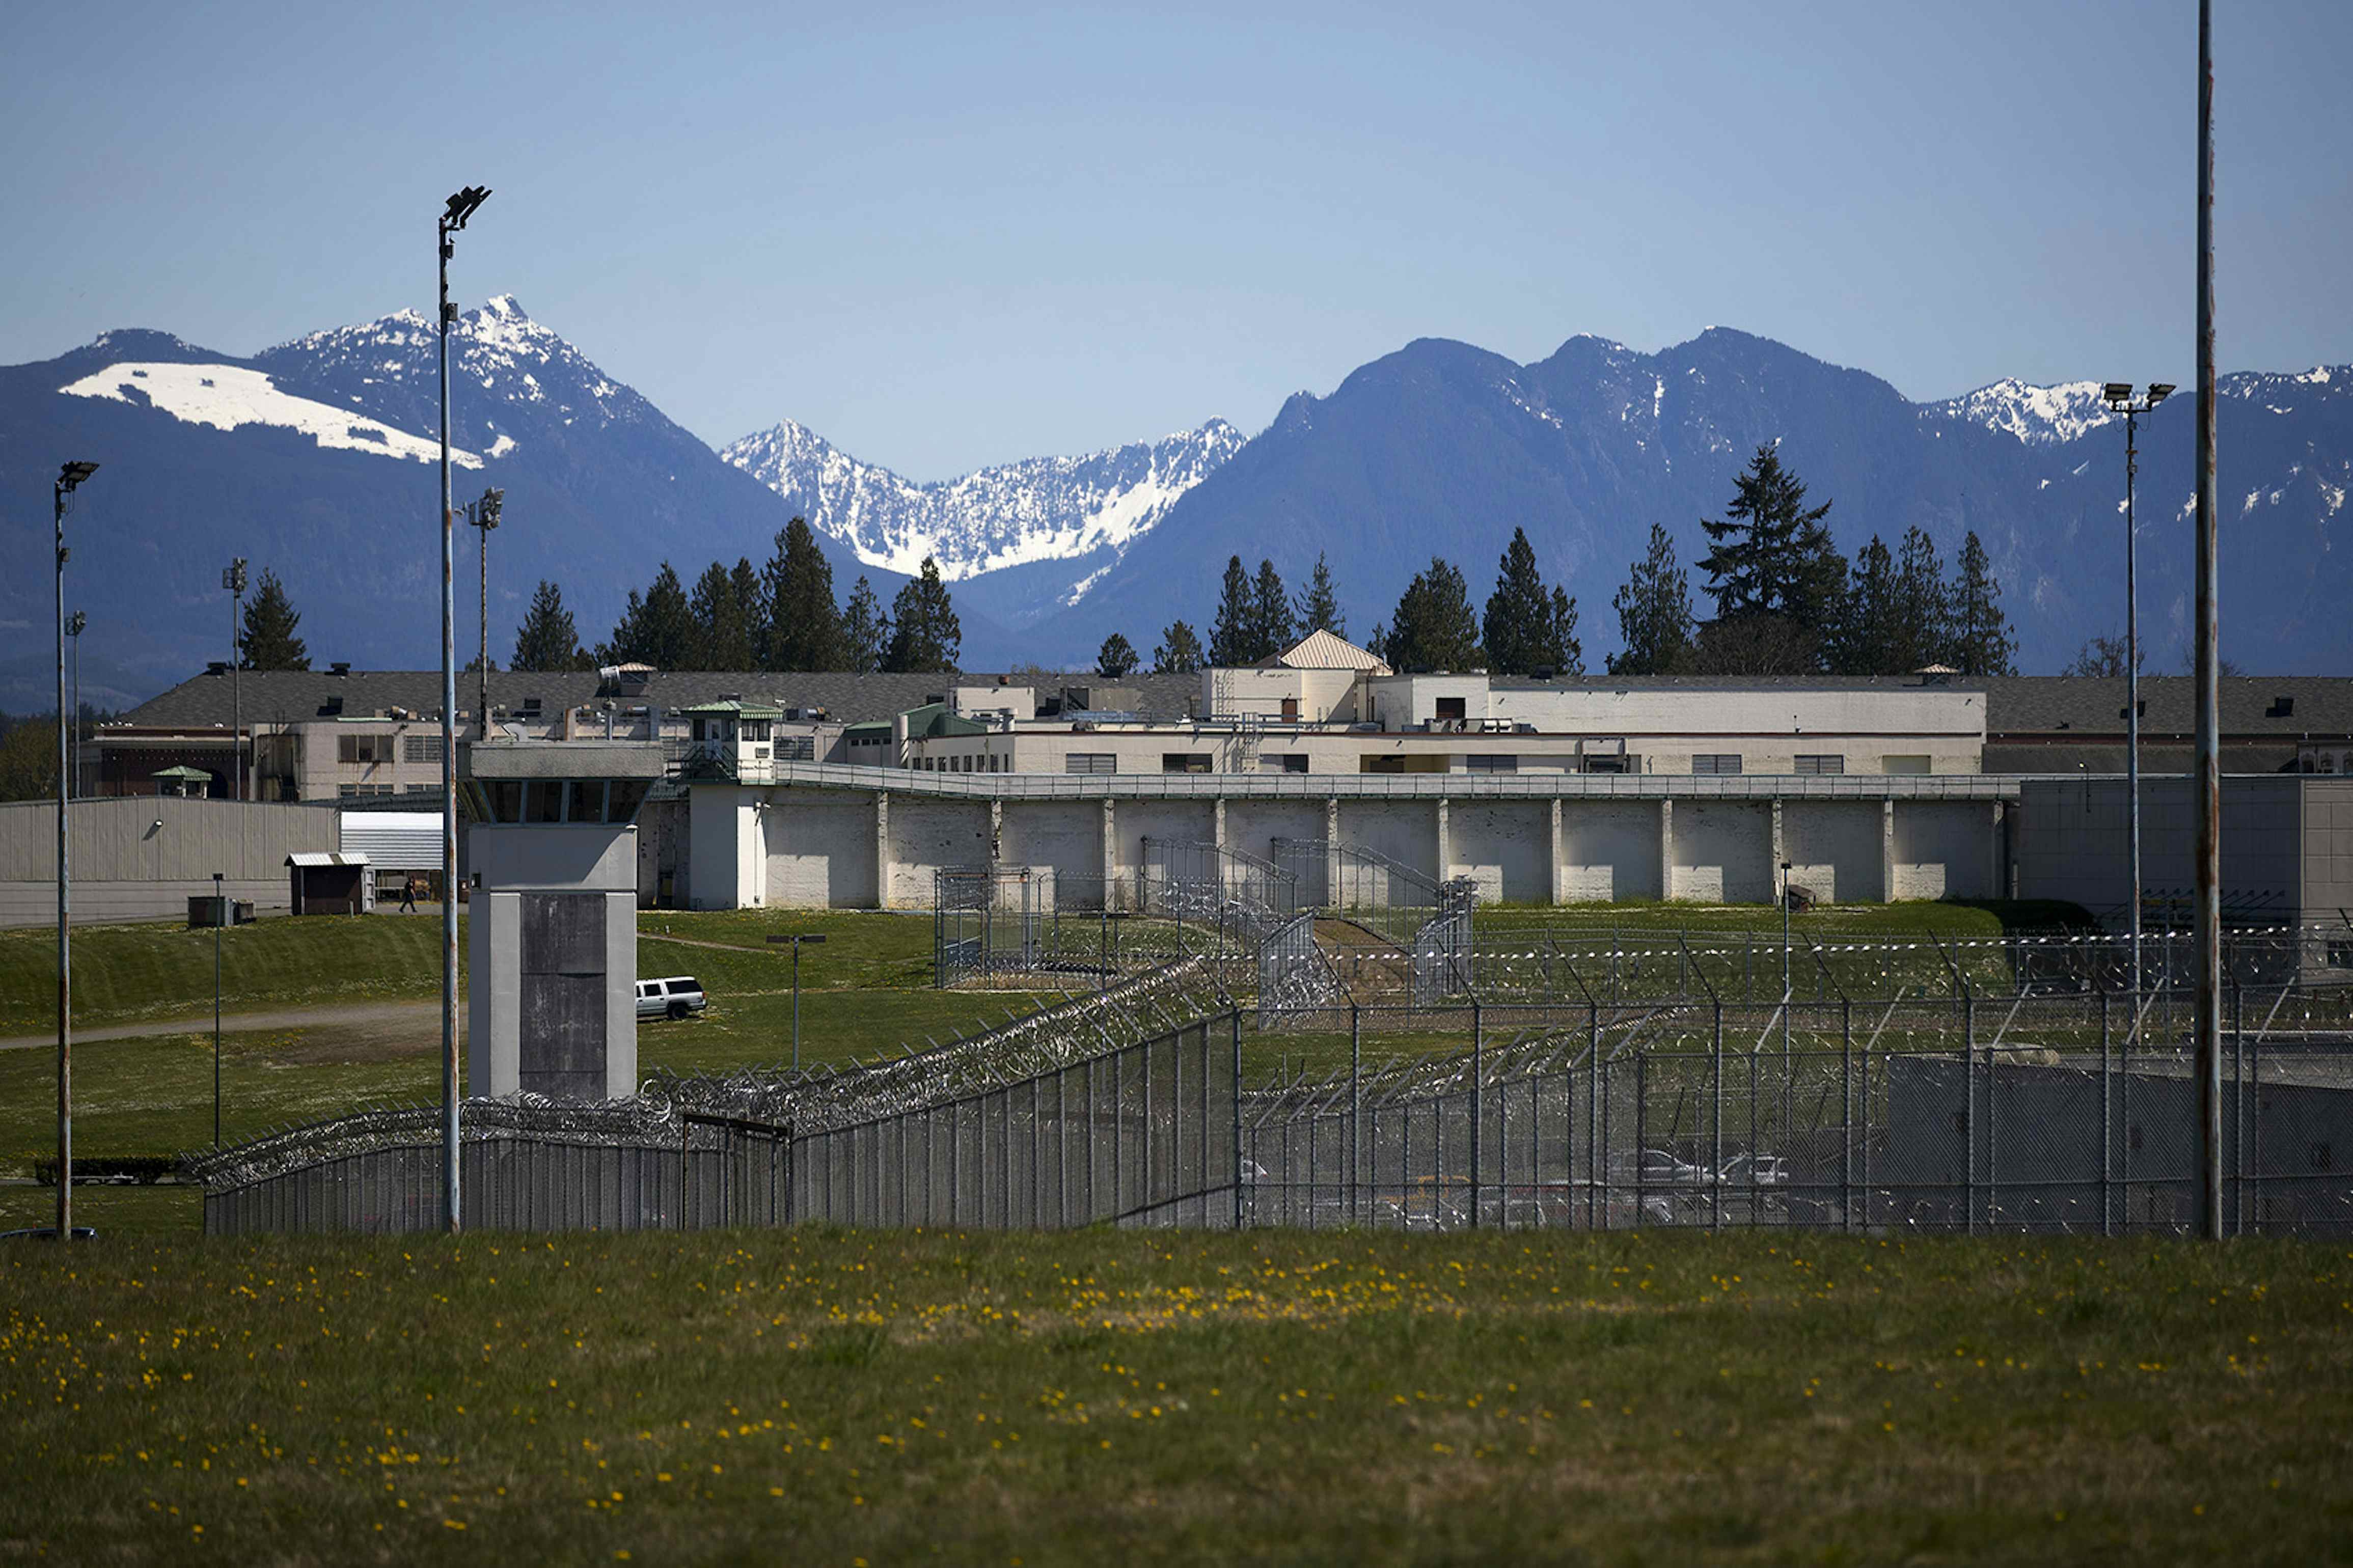 KUOW Impending Monroe prison closure leaves inmates families reeling